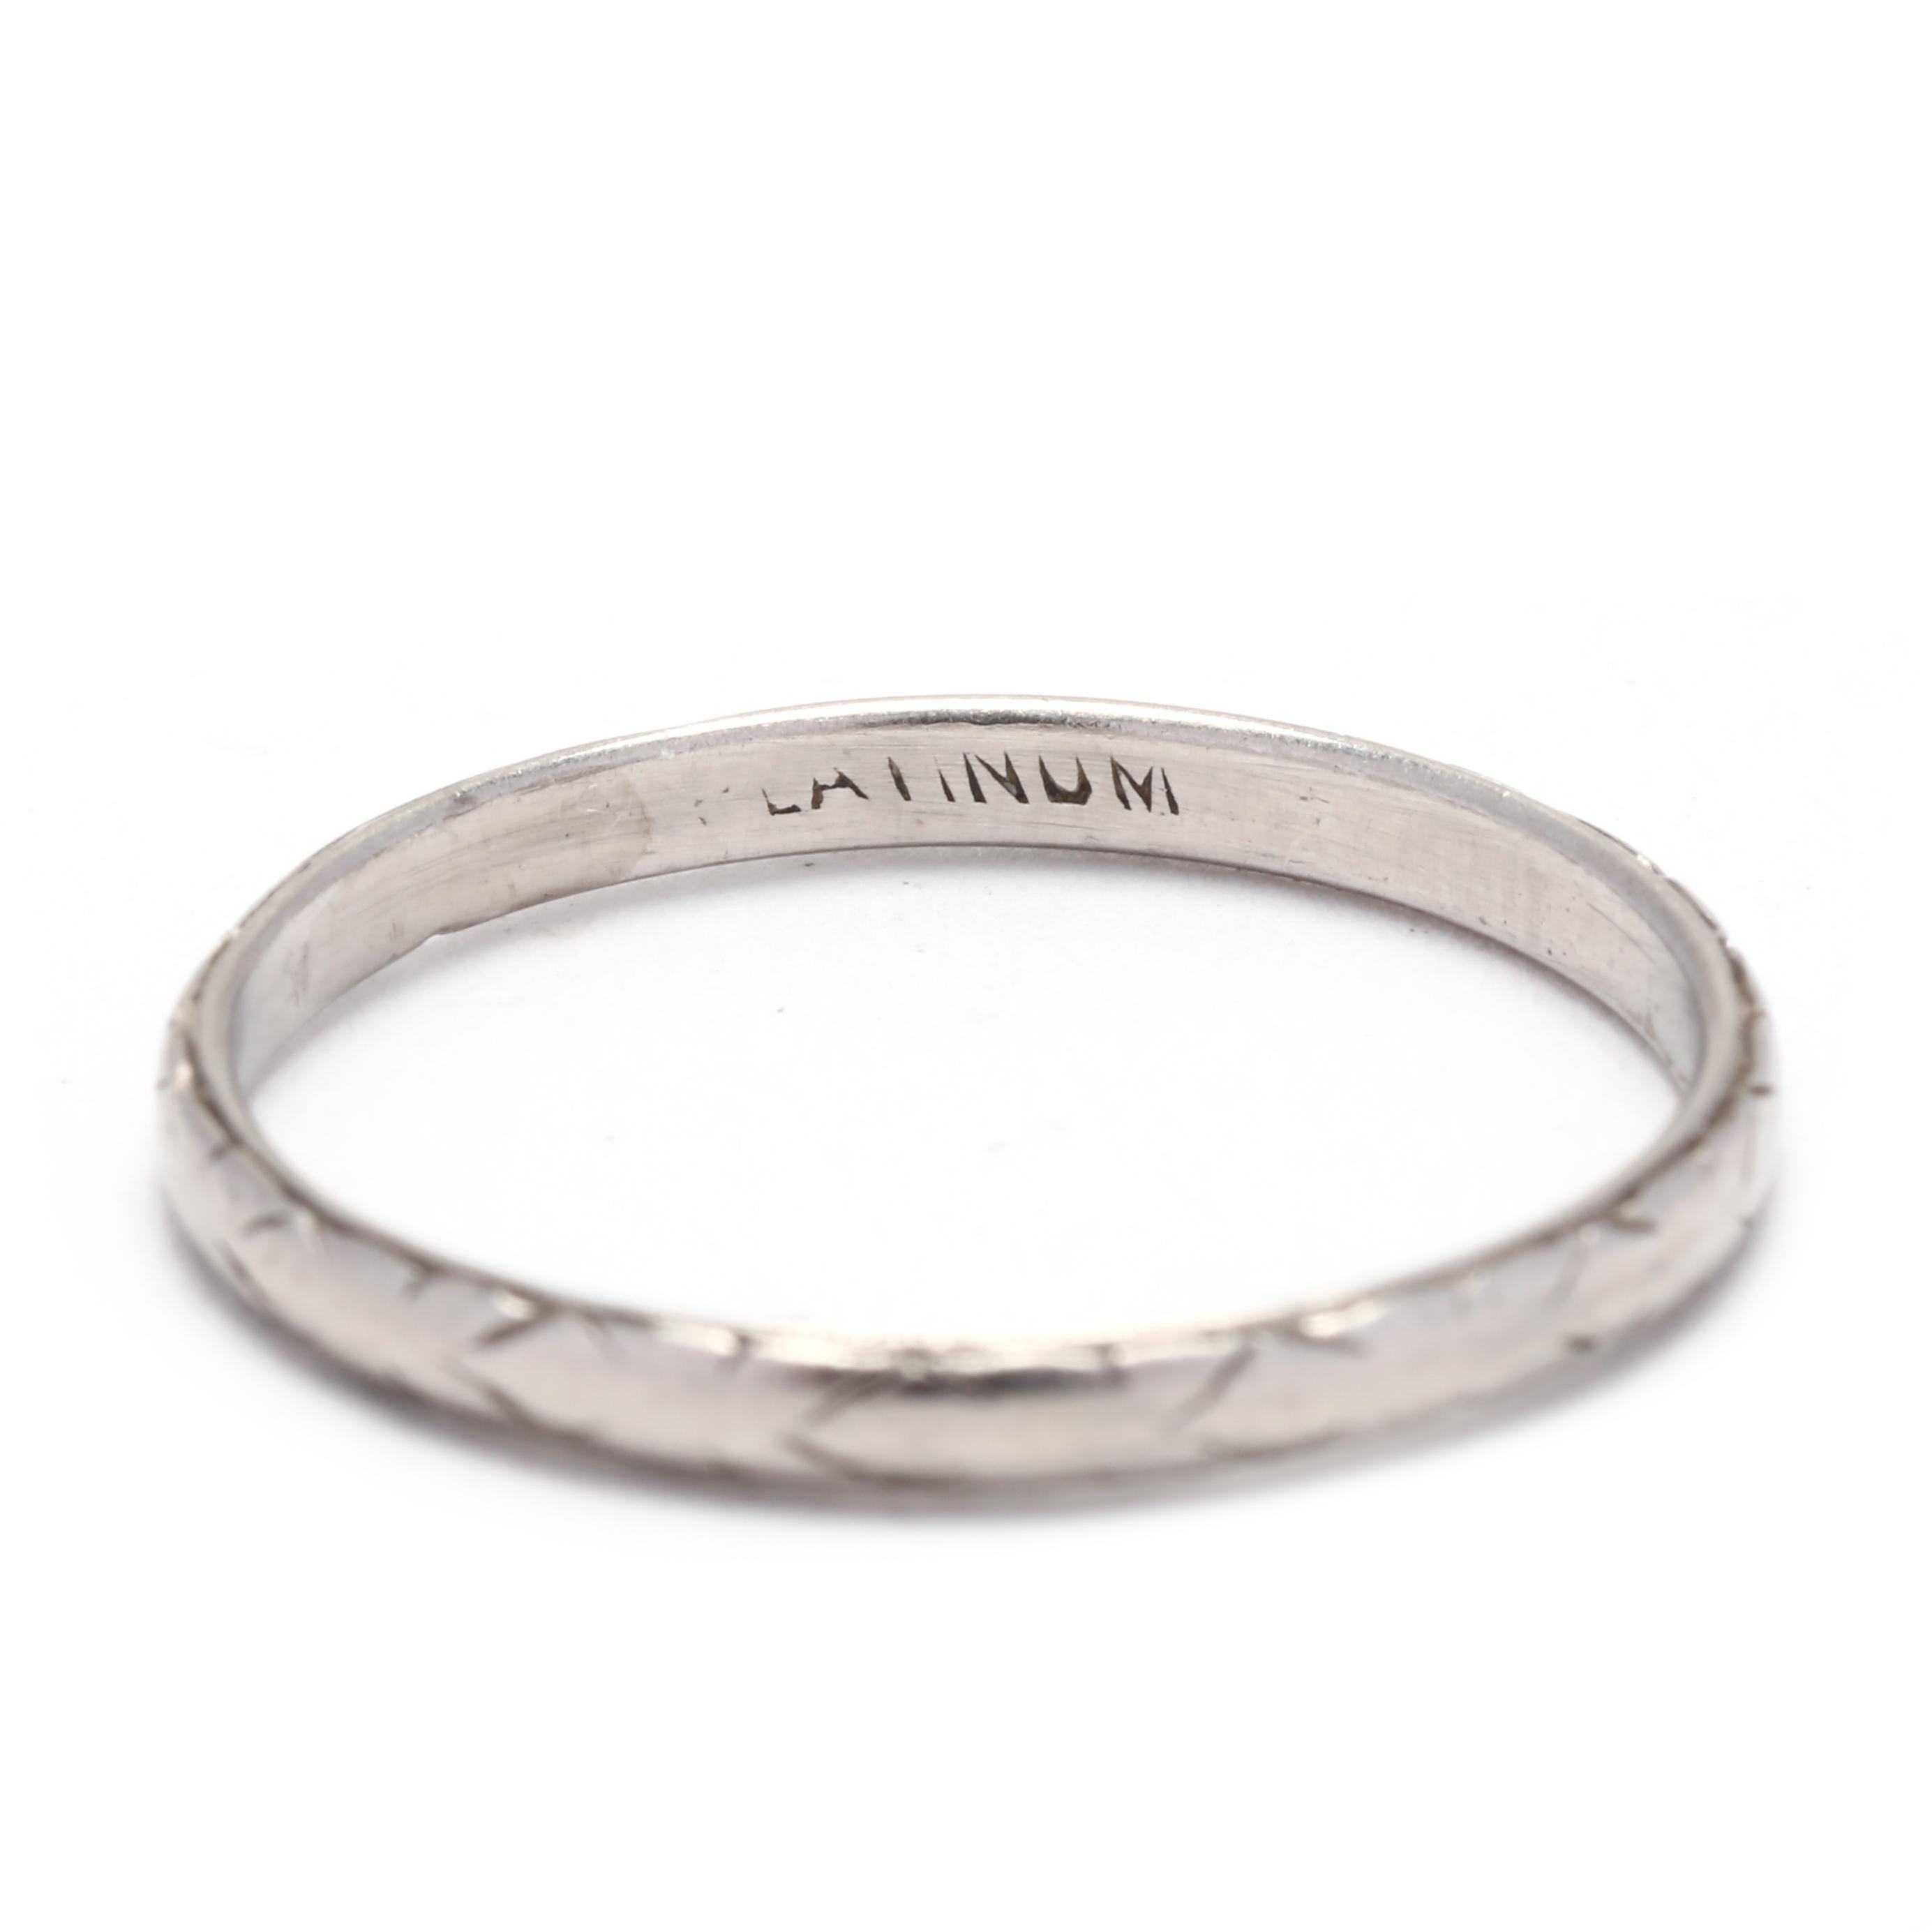 Women's or Men's Art Deco Platinum Engraved Wedding Band, Ring Size 5.75, Thin Engraved Wedding 